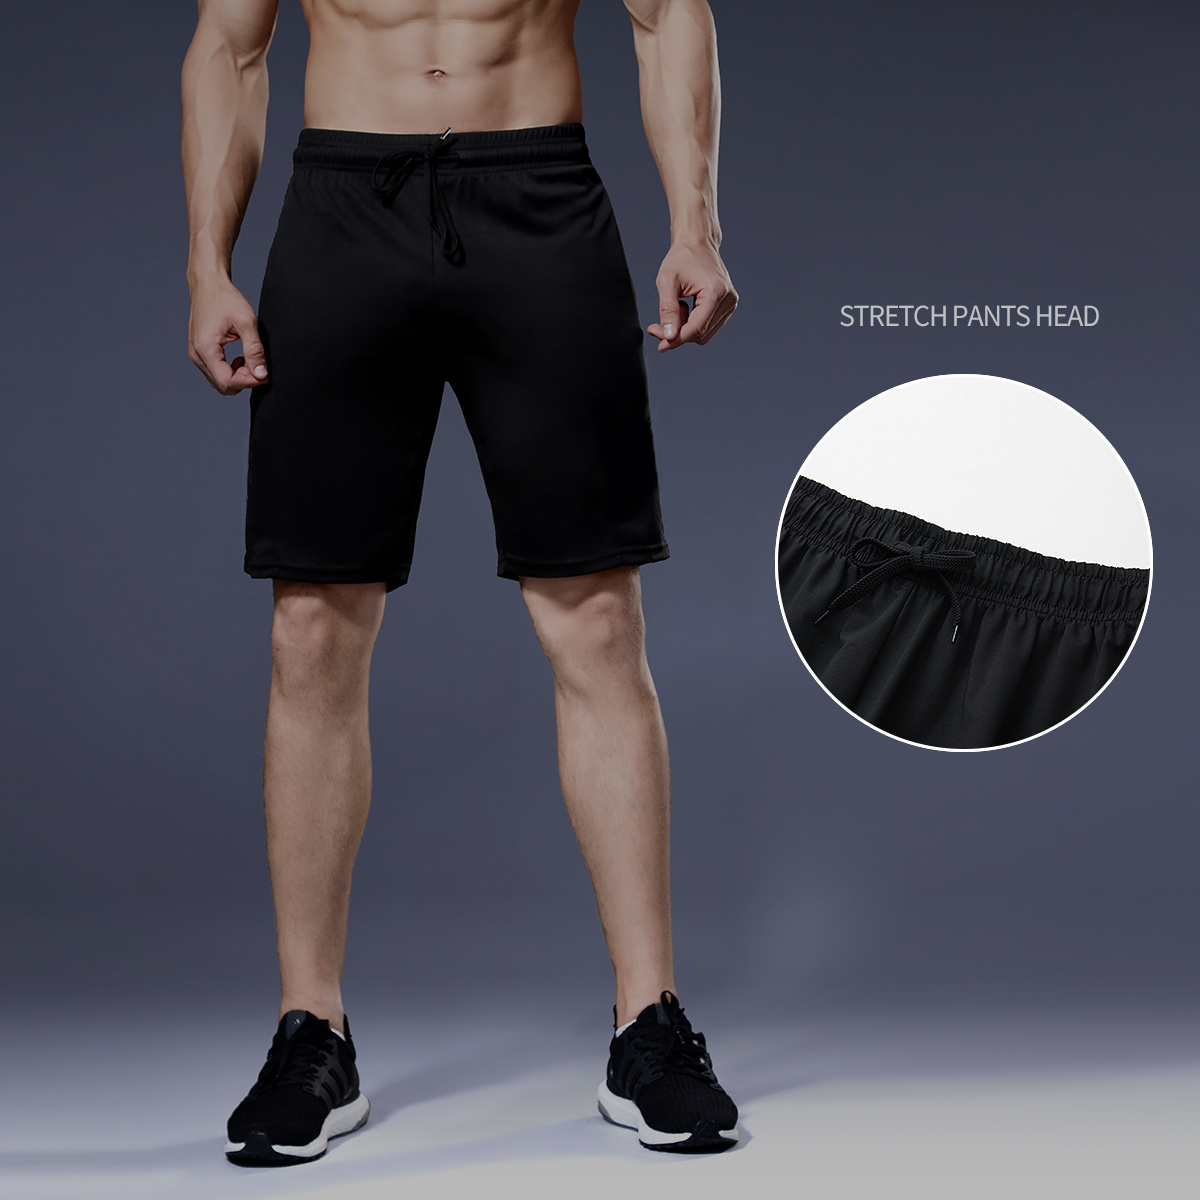 5Pcs Men's Compression Pants Shirt Top Long Sleeve Jacket Athletic